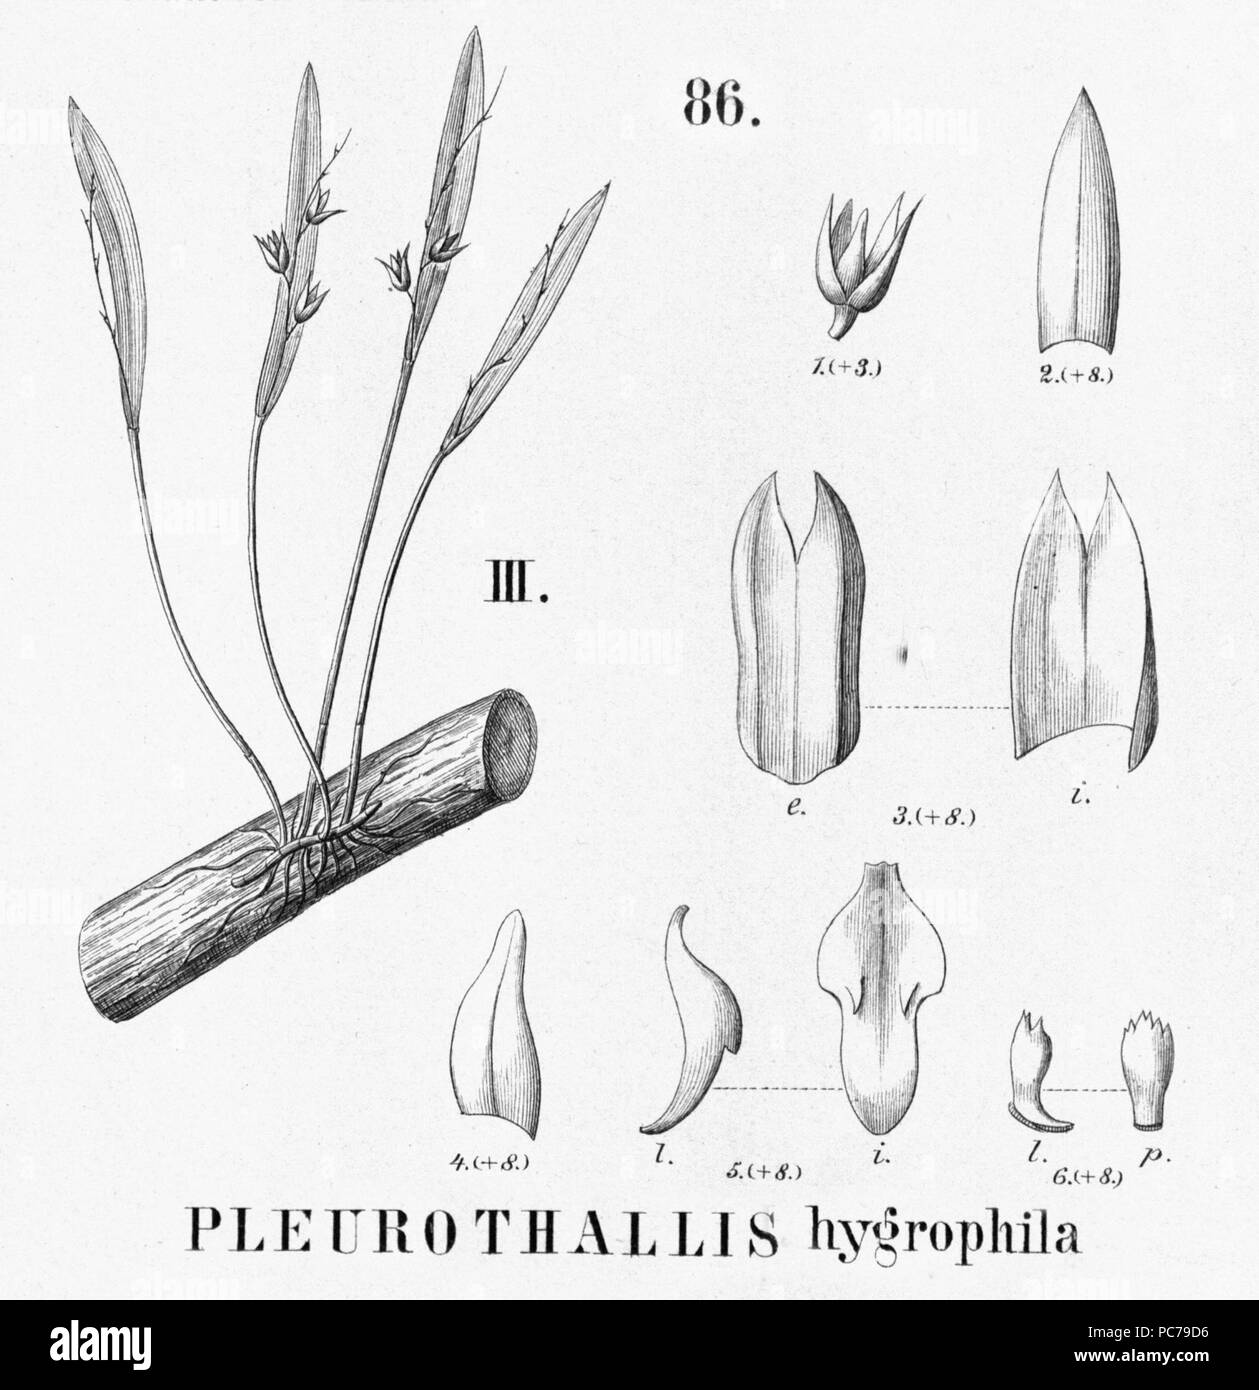 25 Acianthera hygrophila (as Pleurothallis hygrophila) - cutout from Flora Brasiliensis 3-4-86 fig III Stock Photo